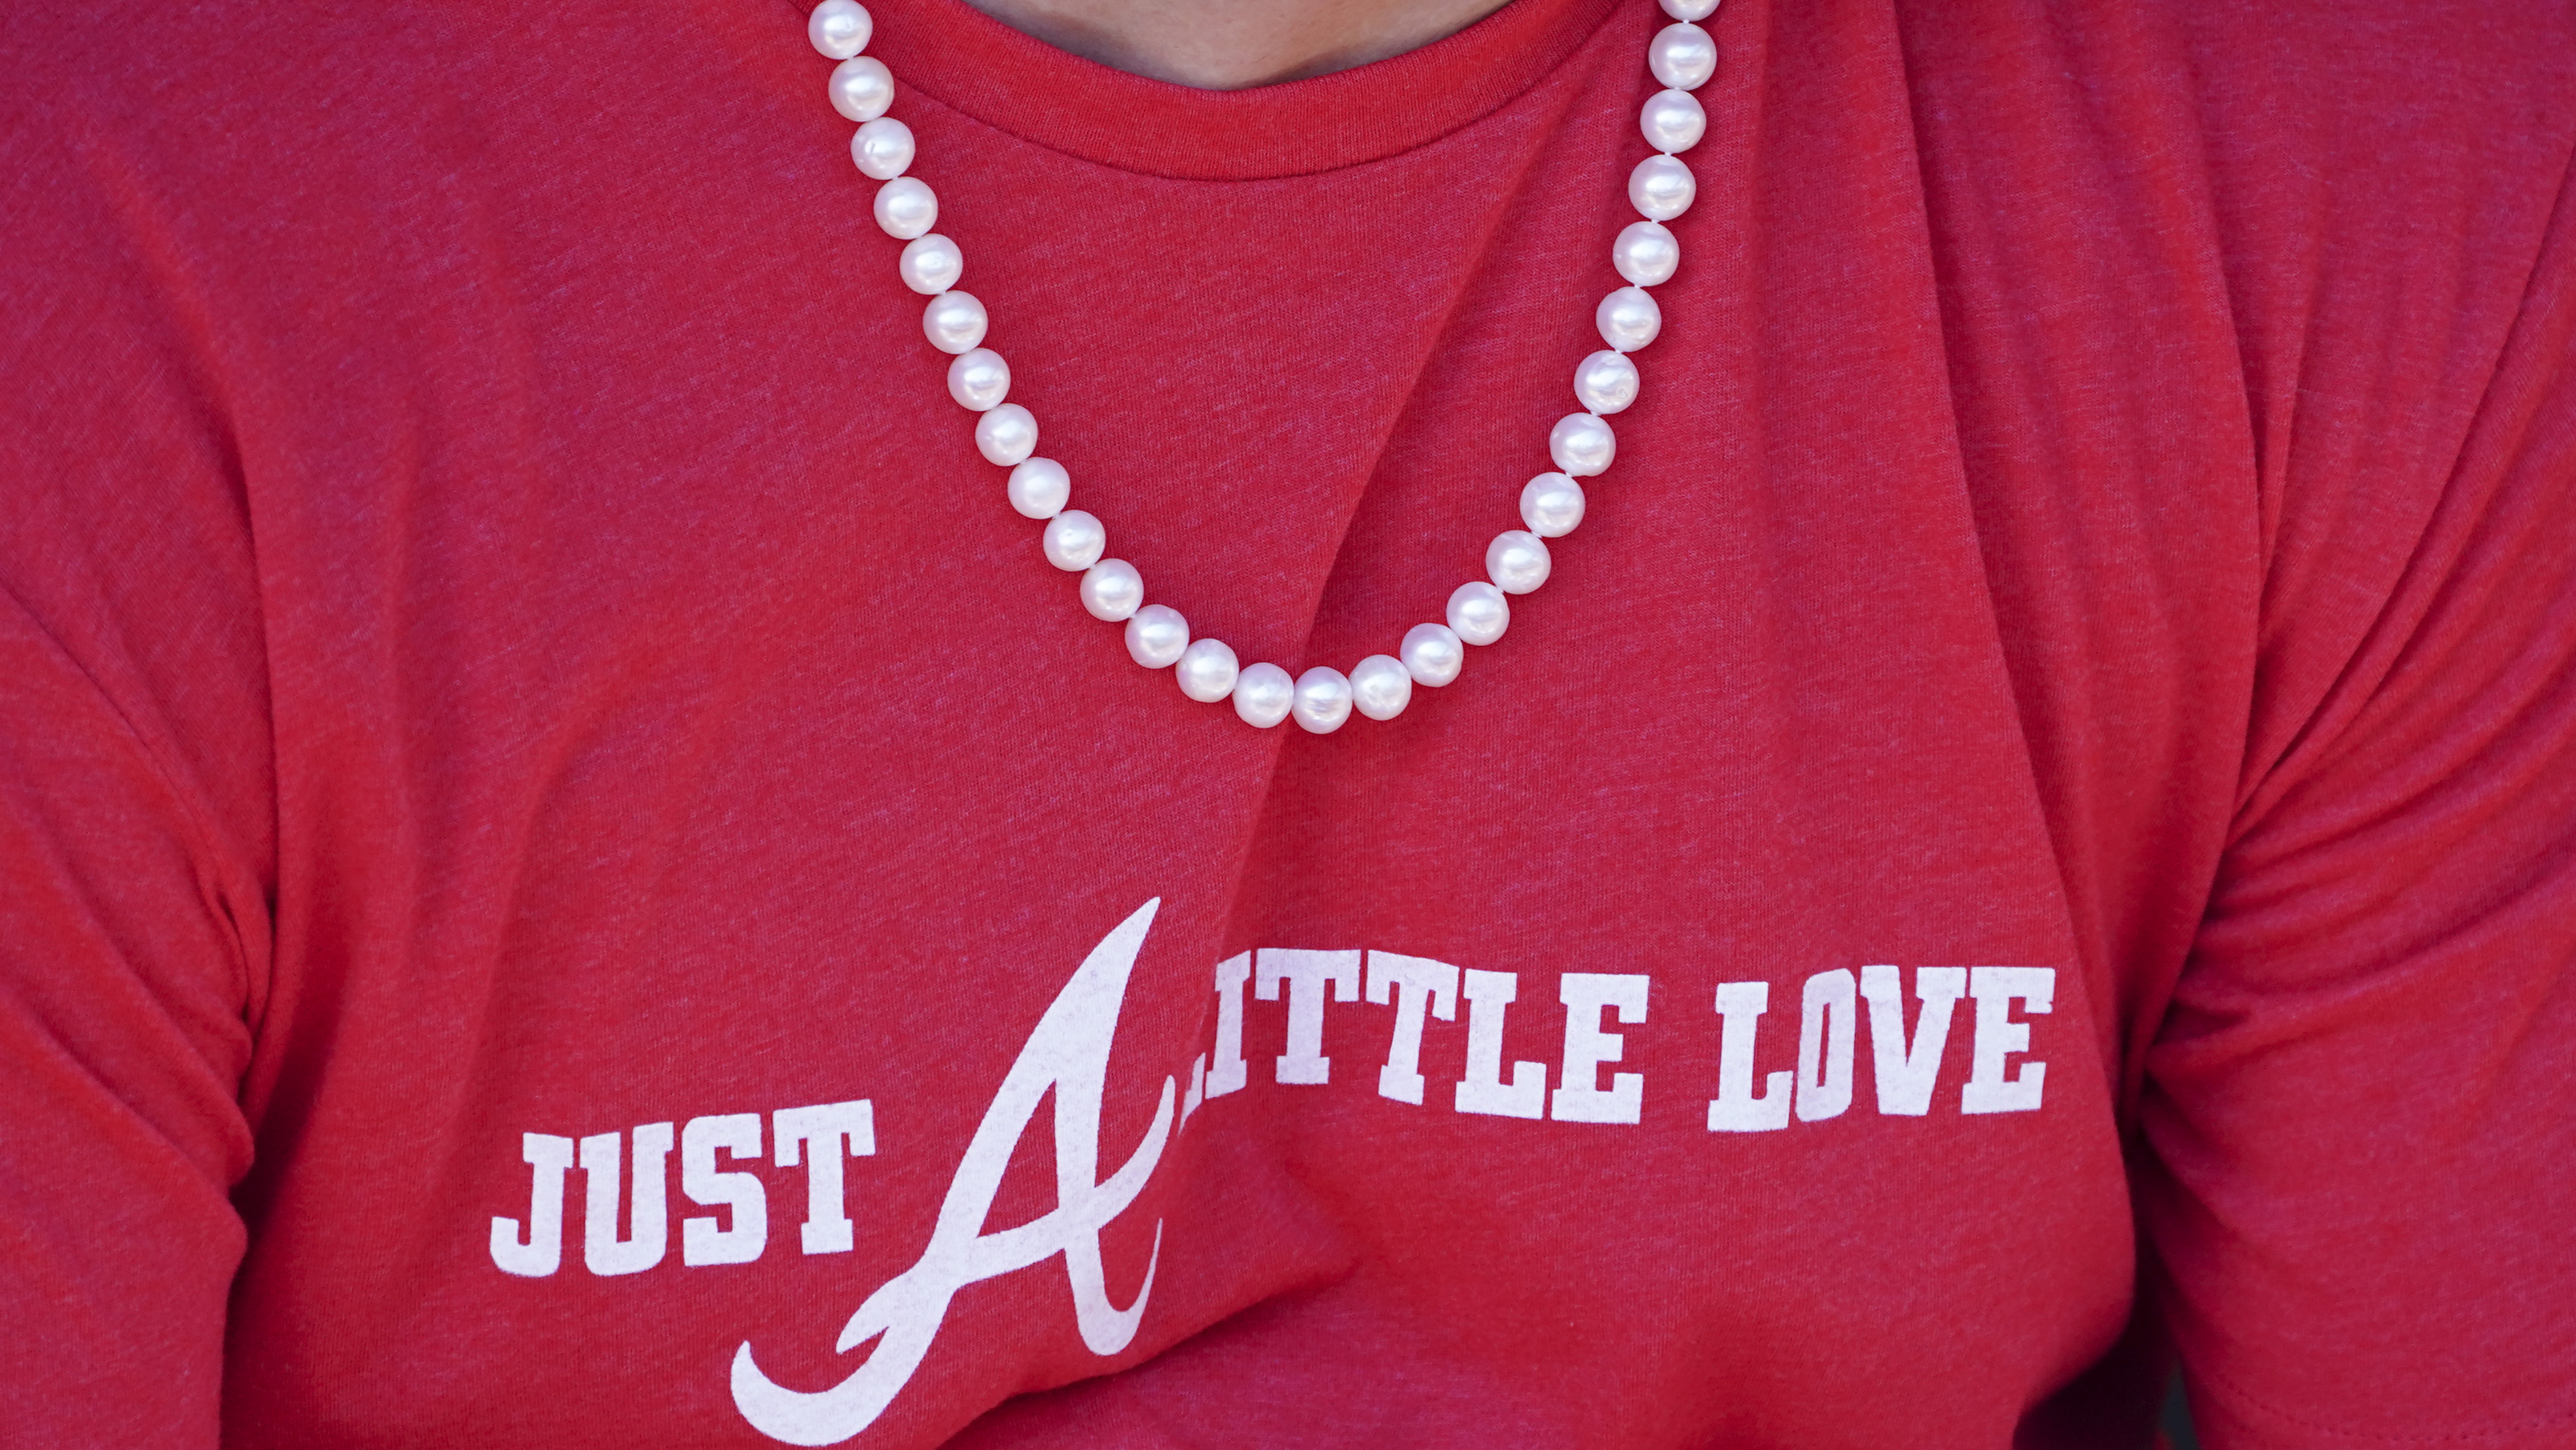 In Atlanta, it's Joctoberfest! Pederson's pearls a hit with Braves fans